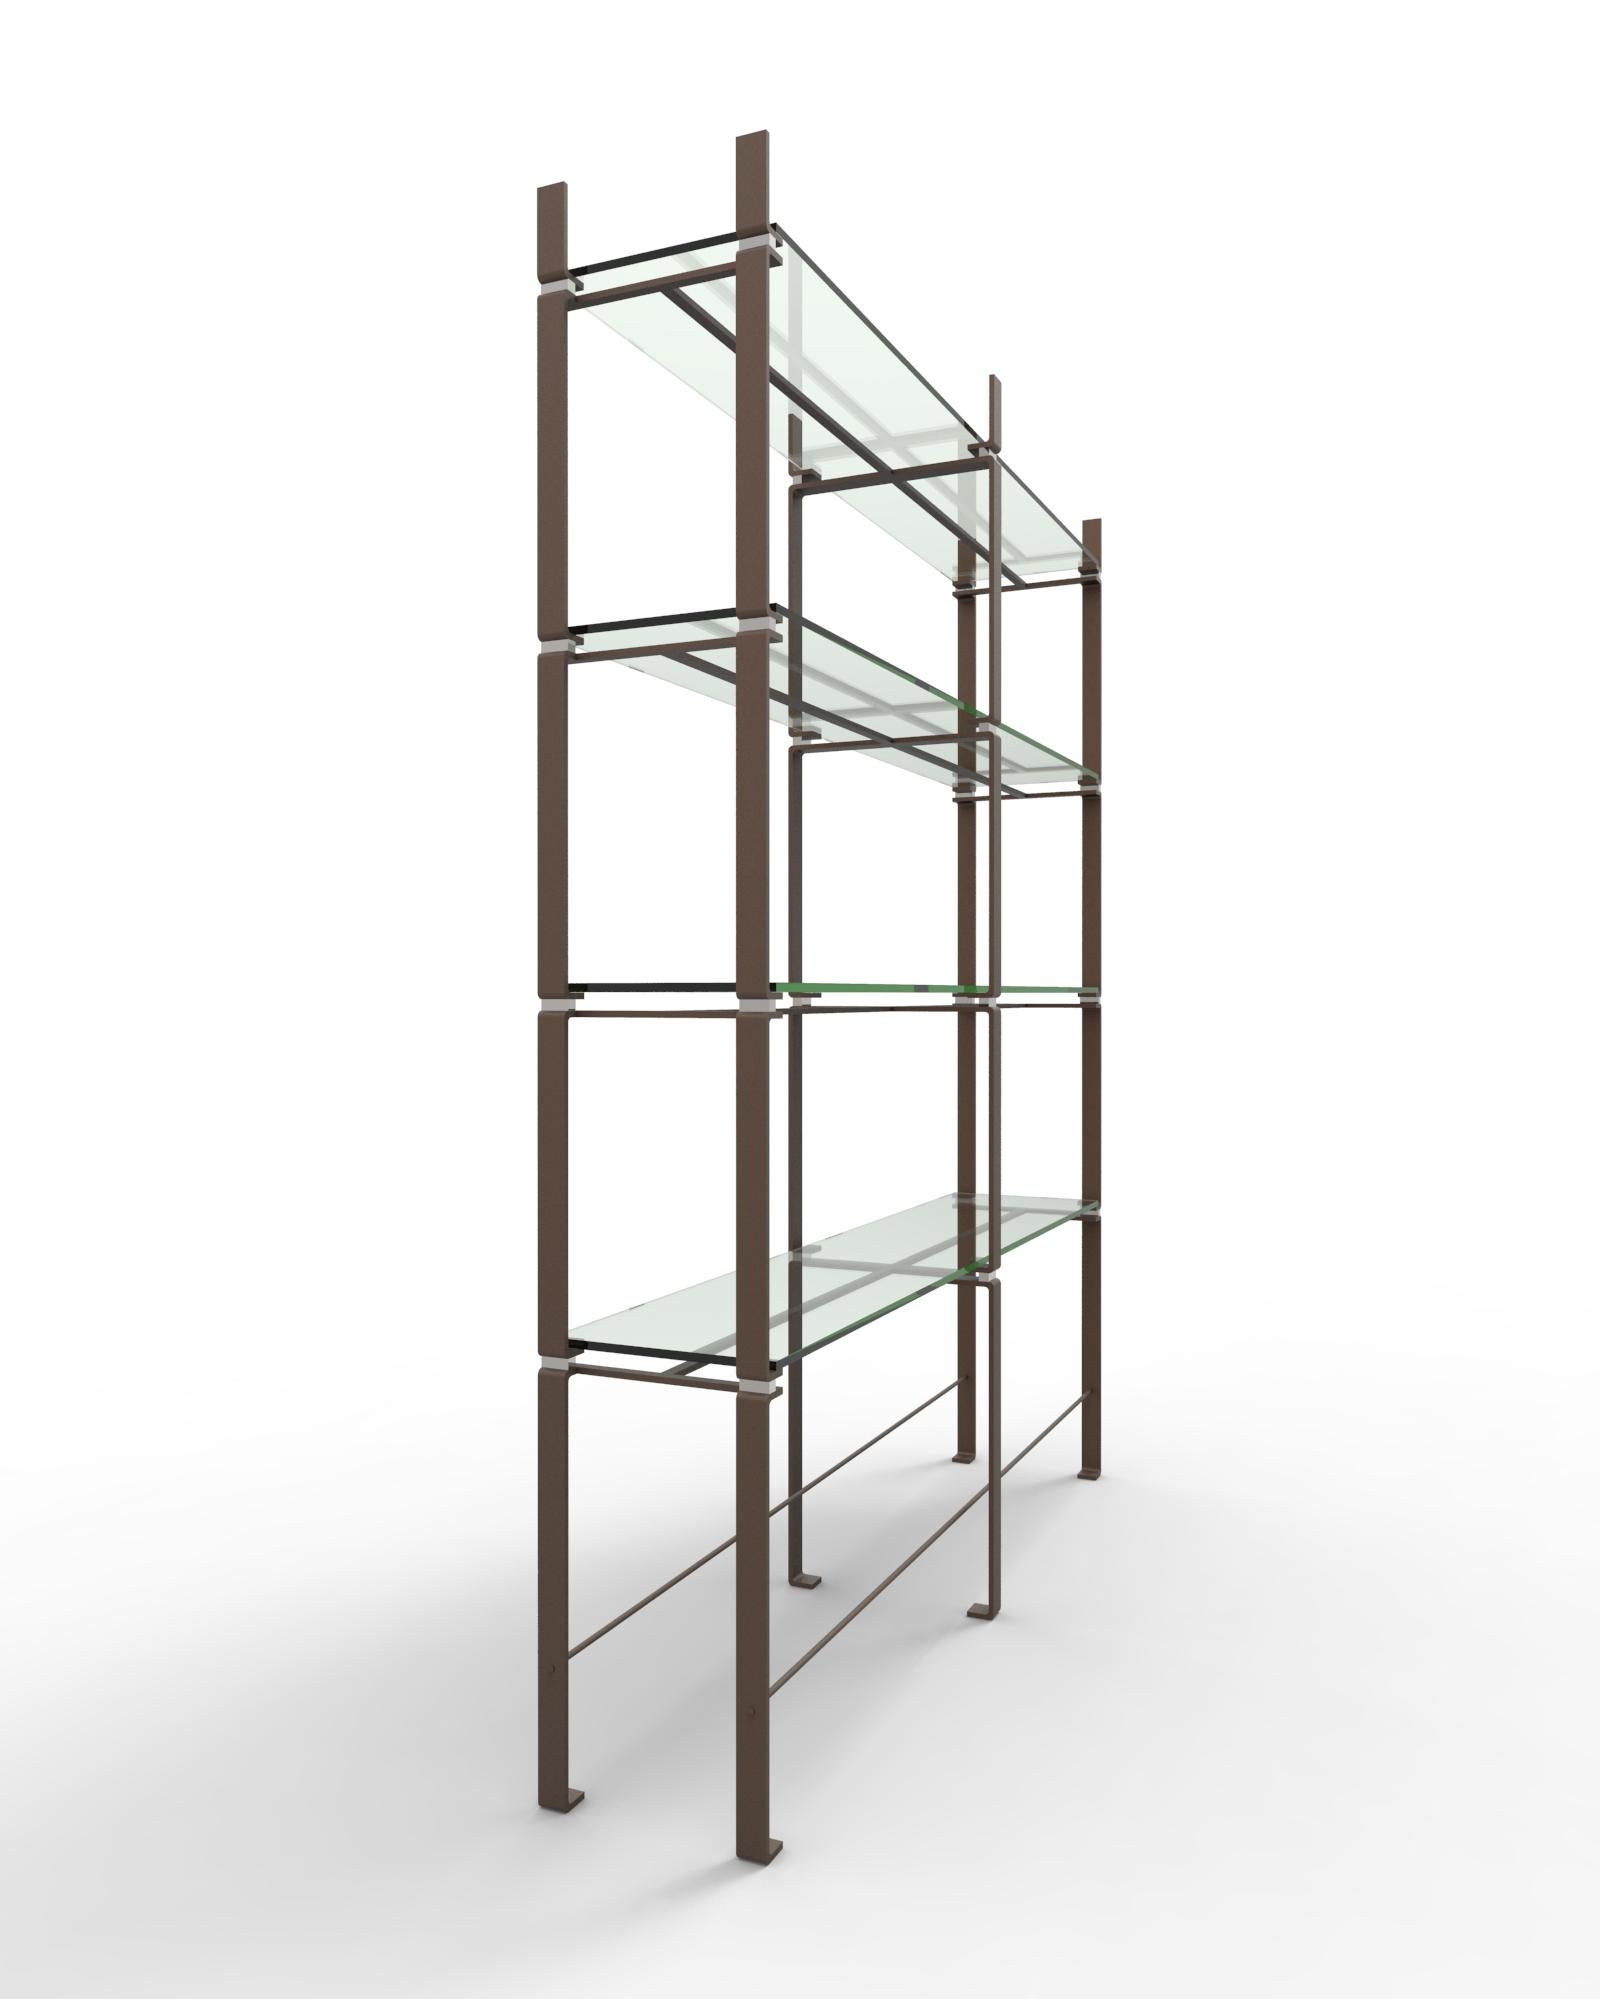 American Double Etagere Shelves by Gentner Design